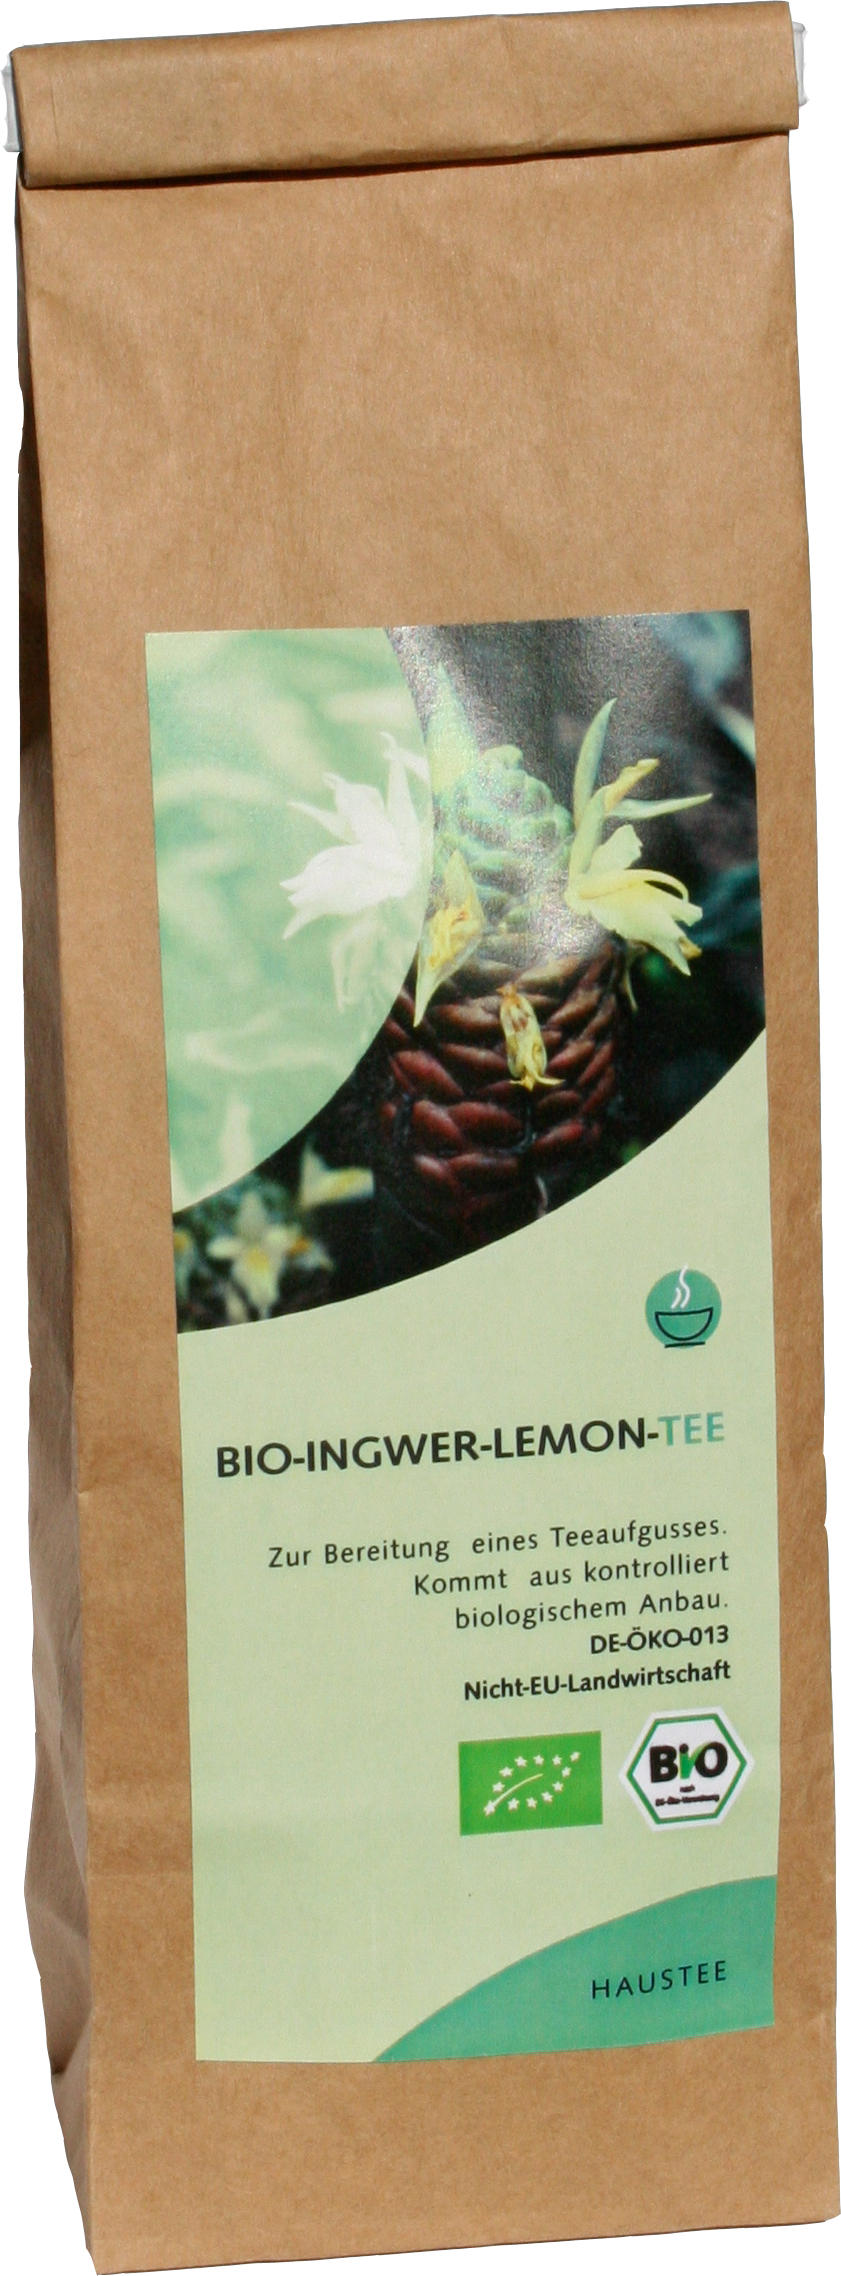 Weltecke Bio-Ingwer-Lemon-Tee